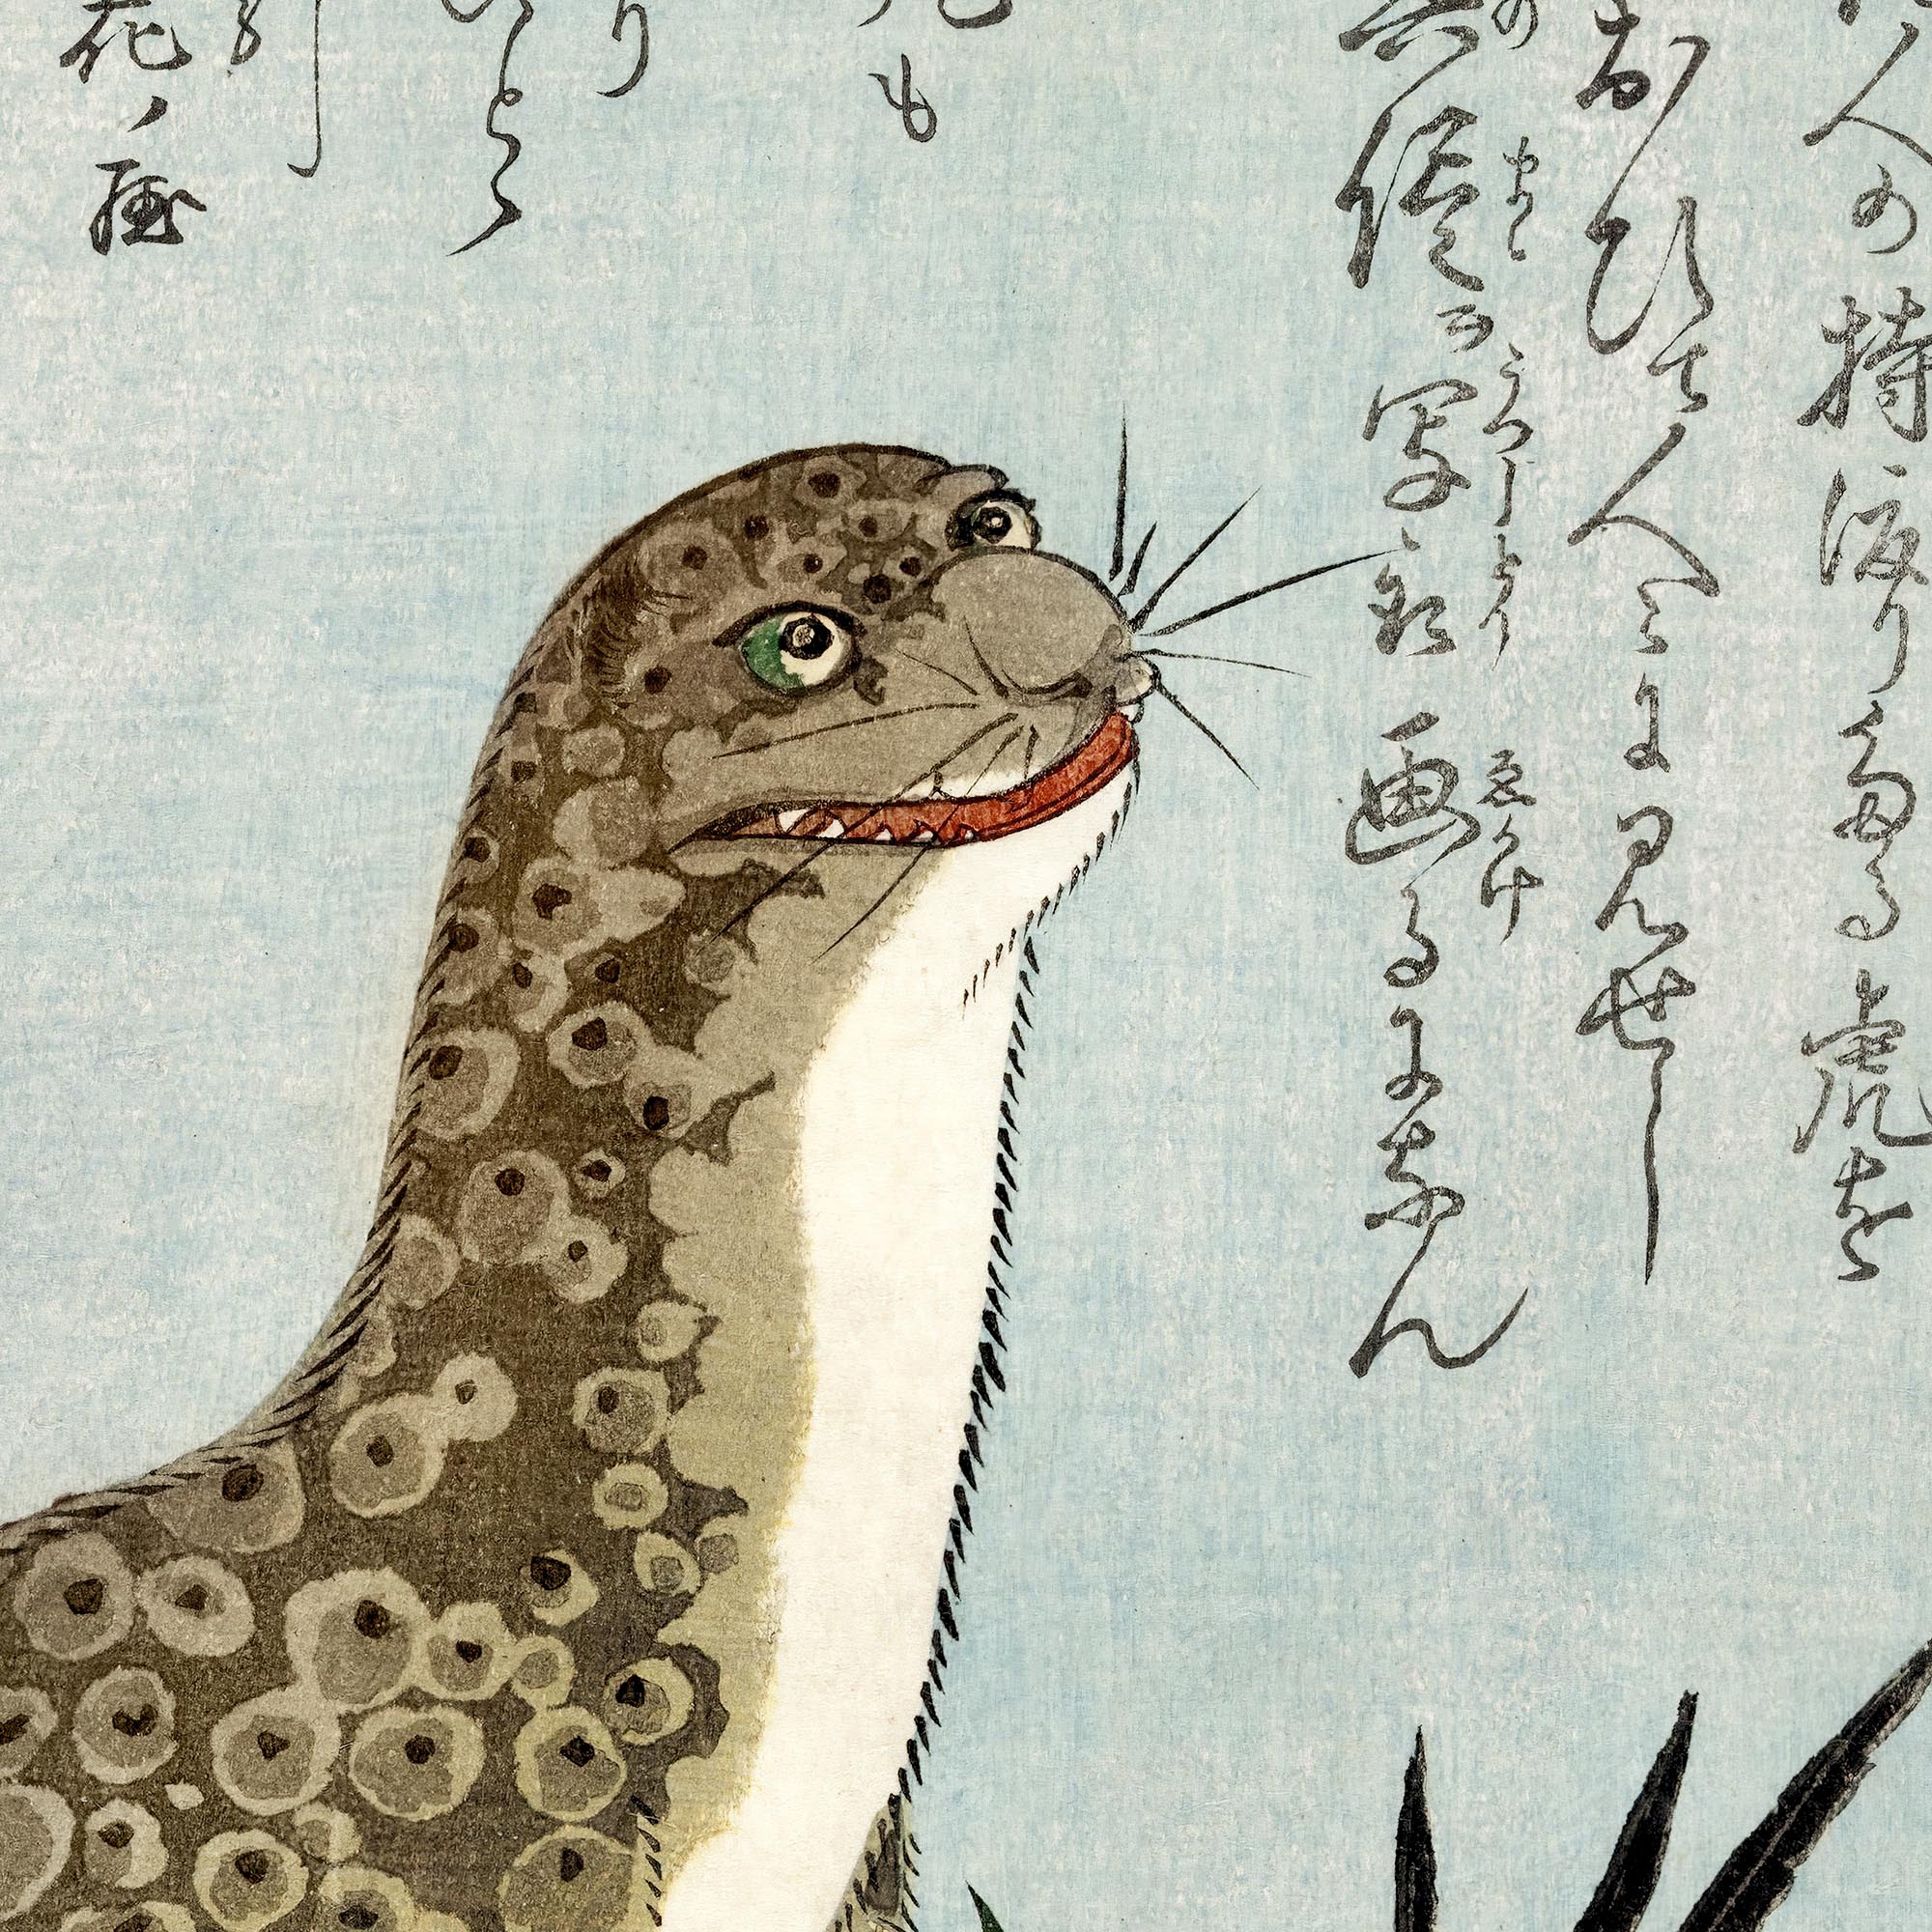 giclee 4"x6" Utagawa Kunimaro: Fierce Tiger Drawn from Life | Kawaii Ukiyo-e Japanese Mythology Woodblock Fine Art Print